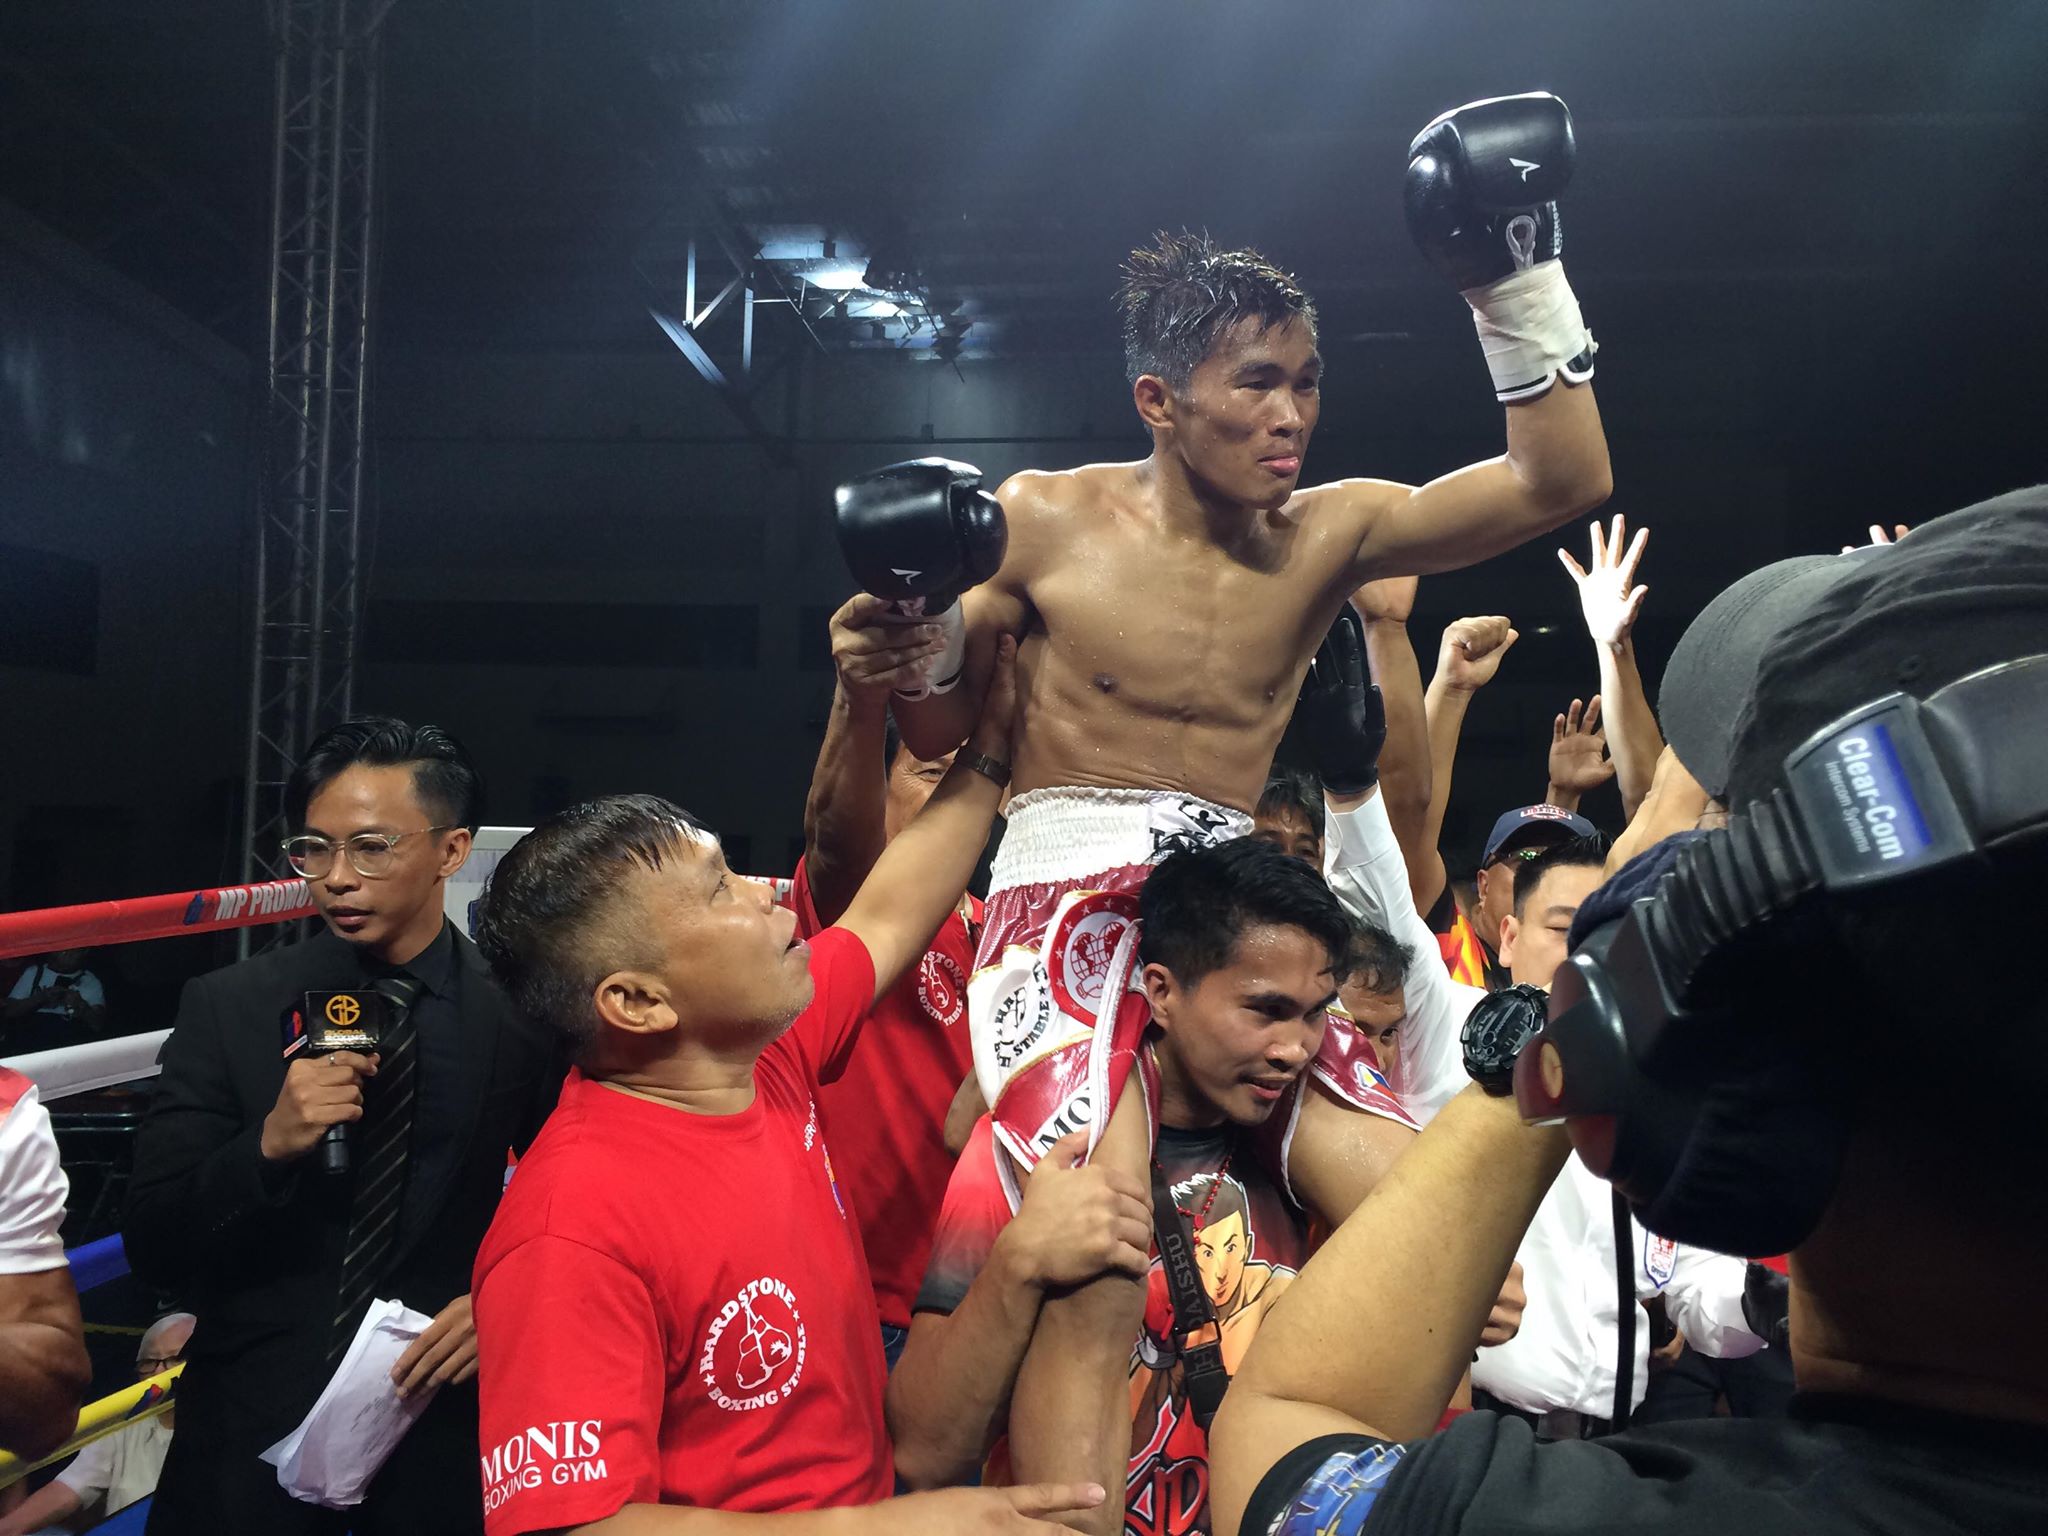 Bicolano becomes newest Filipino world boxing champion - Filipino Times